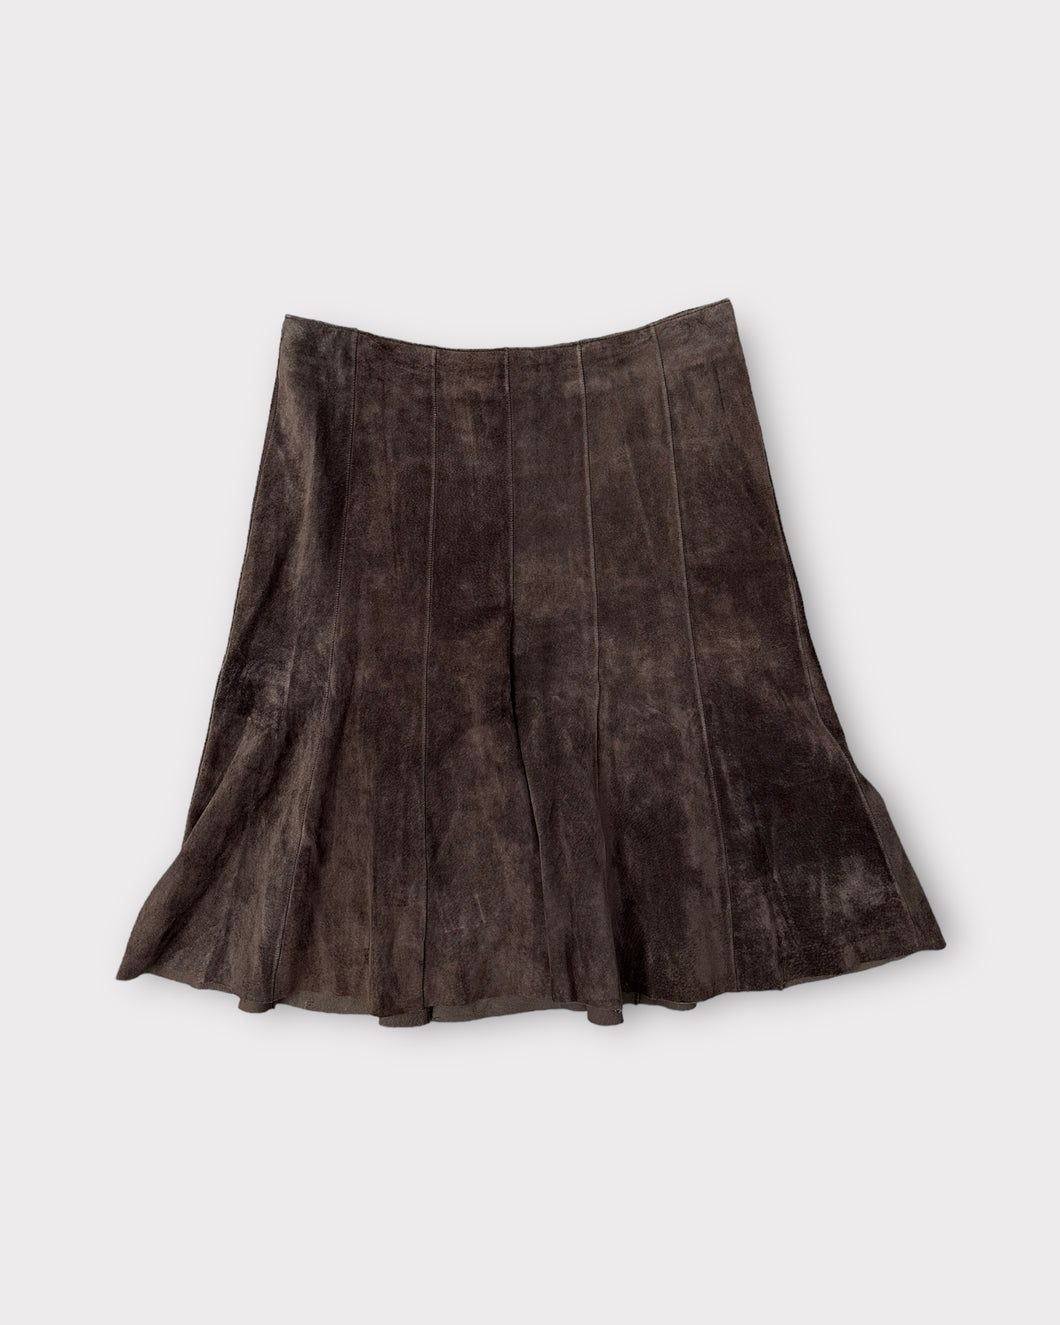 June Chocolate Brown Leather Midi Skirt (4)